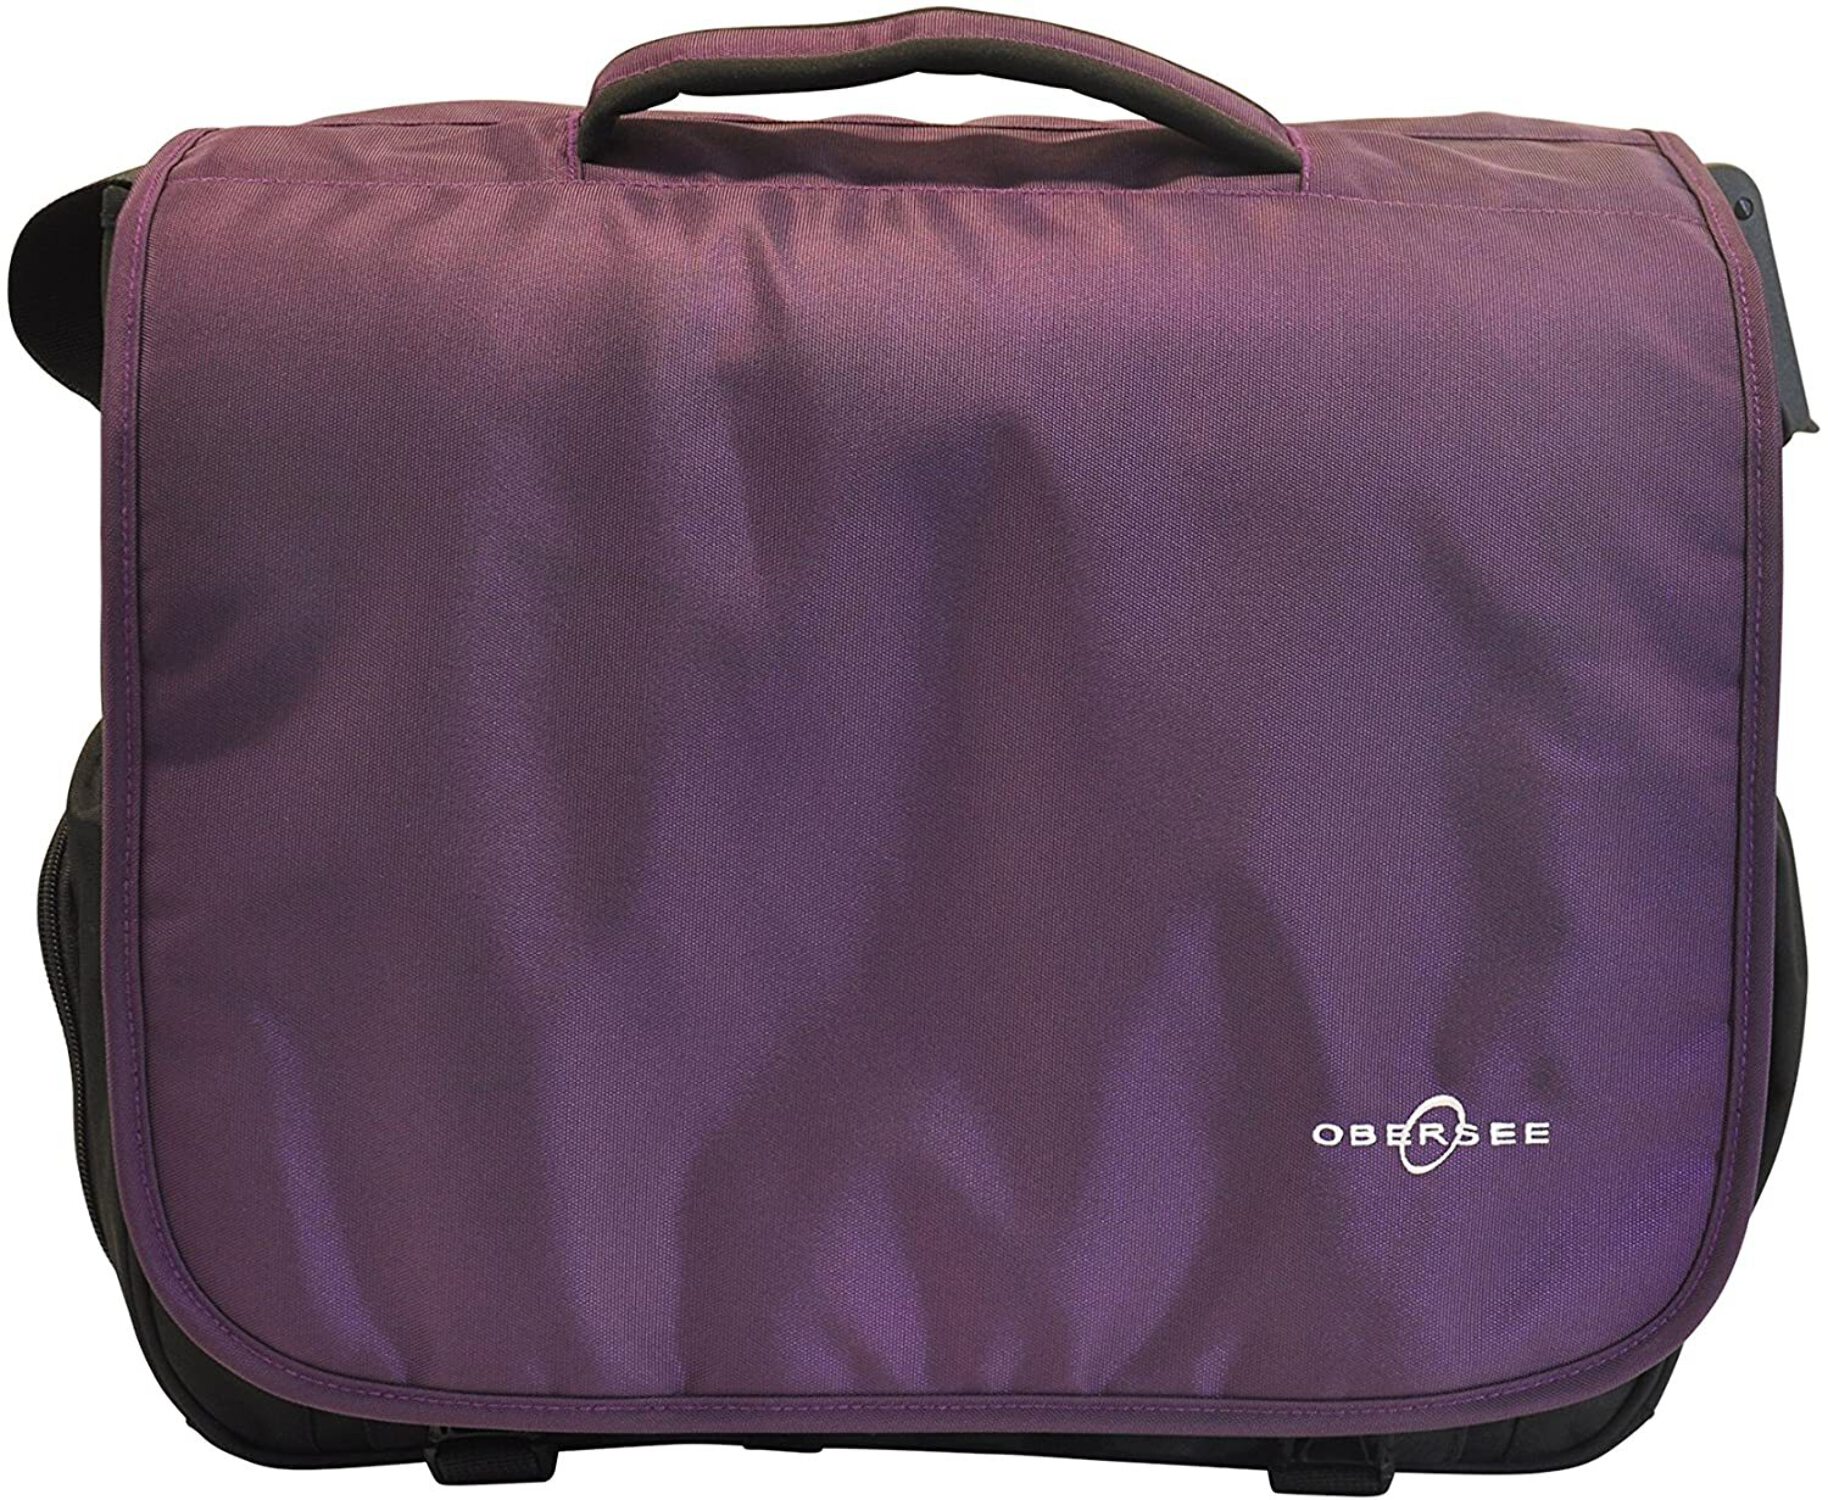 Obersee Madrid Convertible Diaper Backpack Messenger Bag-Color:Black/Purple - image 1 of 11